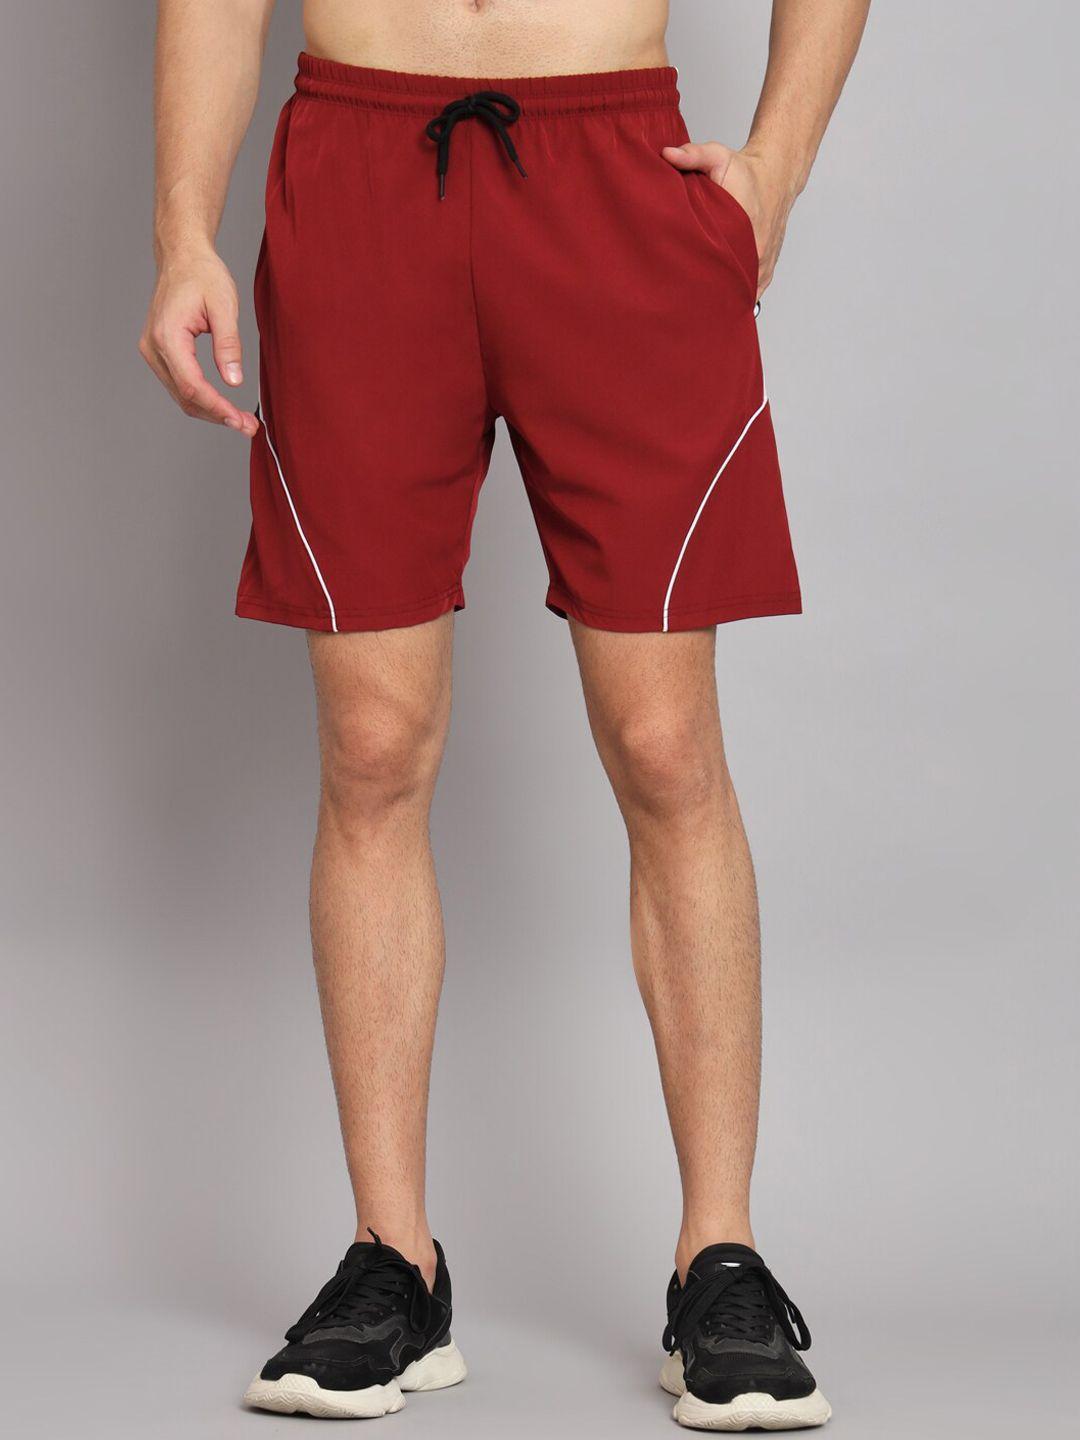 glito men maroon training or gym sports shorts